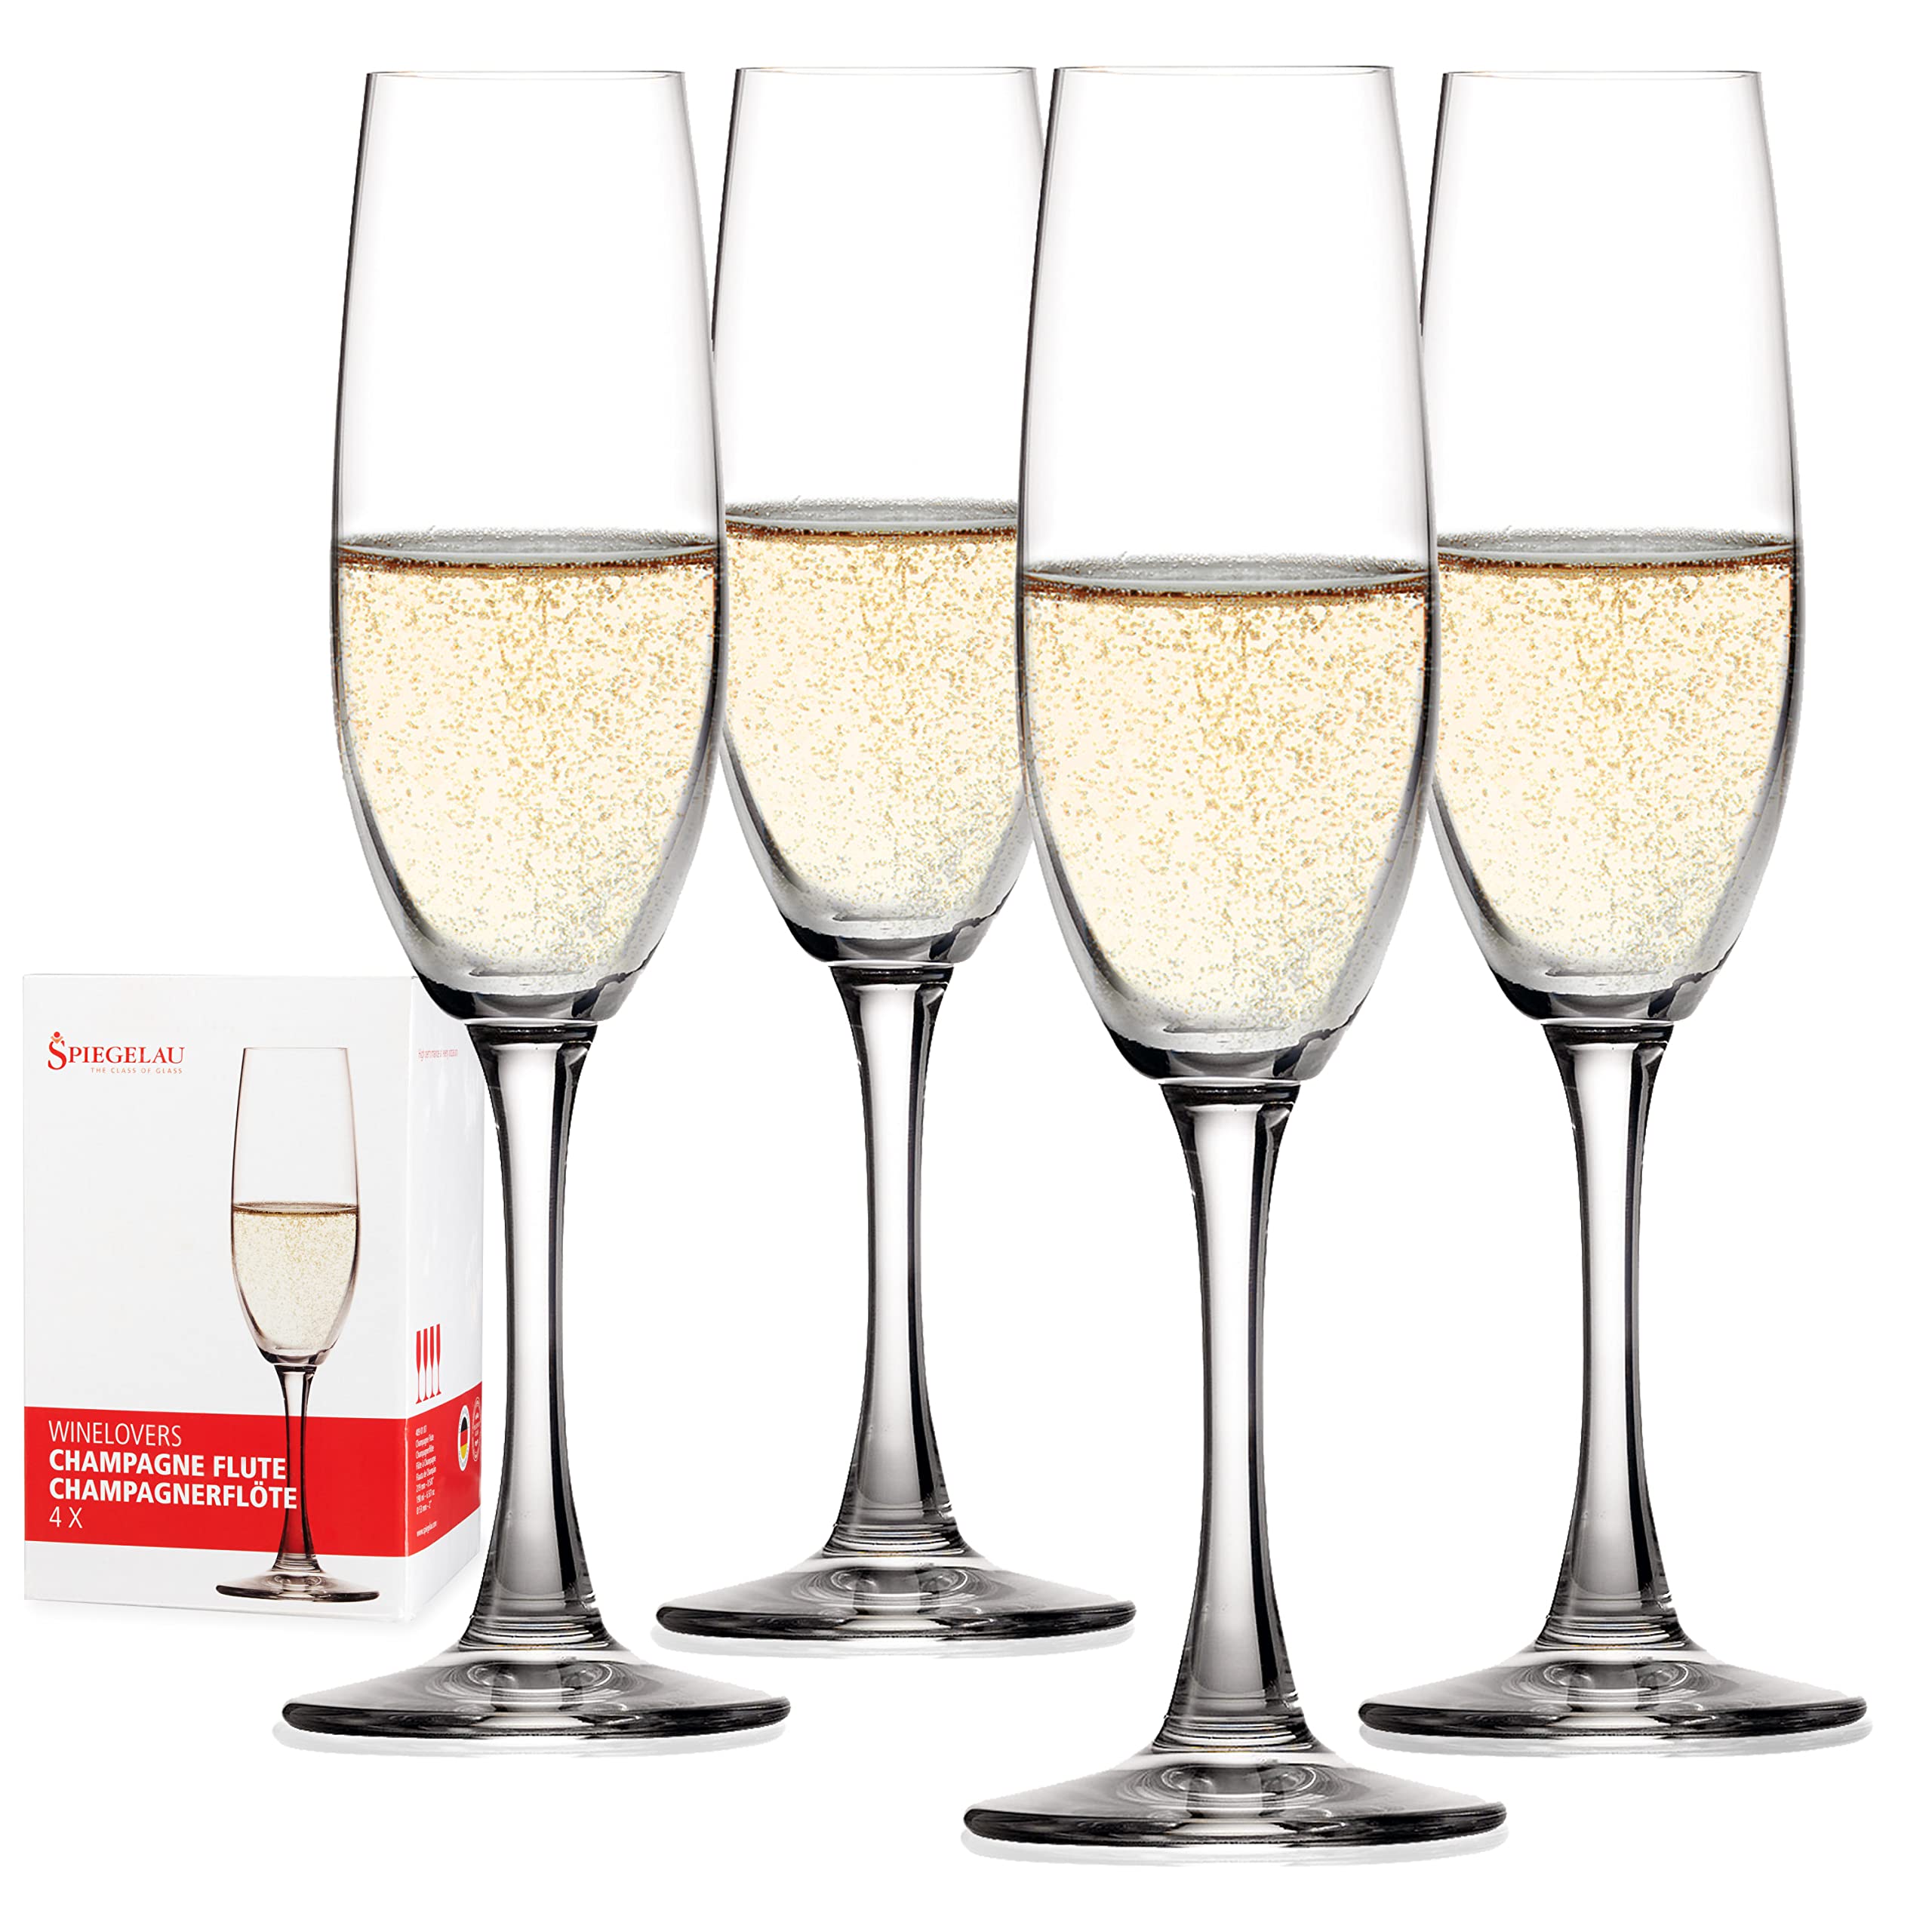 Spiegelau Wine Lovers Champagne Wine Glasses, Set of 4, European-Made Lead-Free Crystal, Classic Stemmed, Dishwasher Safe, Profe